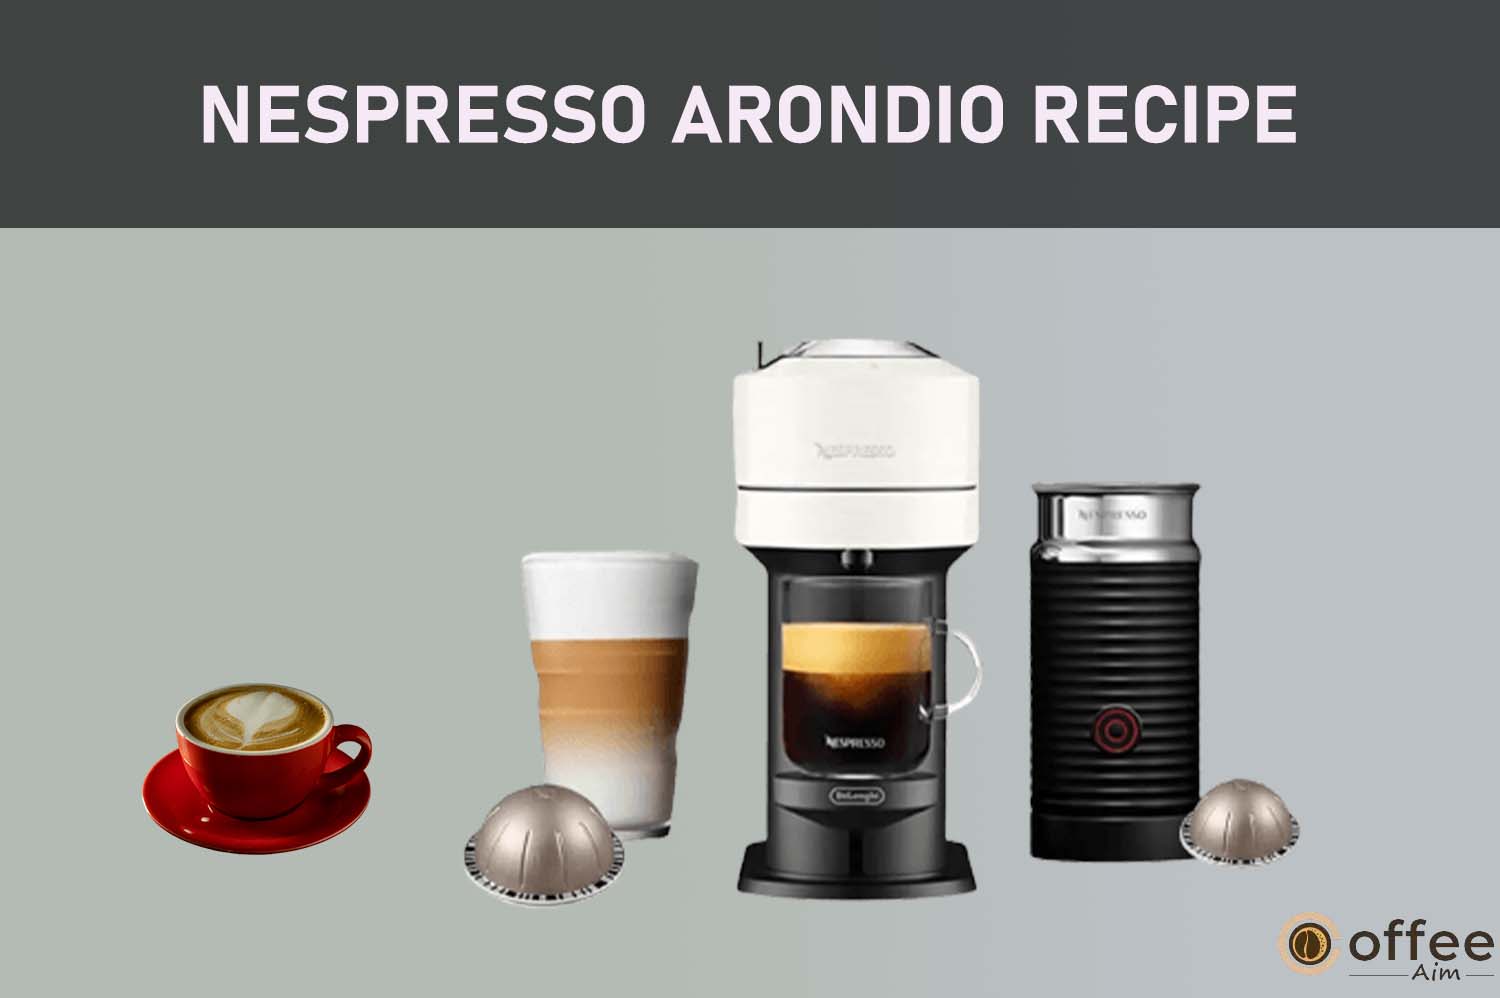 Feature image for the article "Nespresso Arondio Recipe"